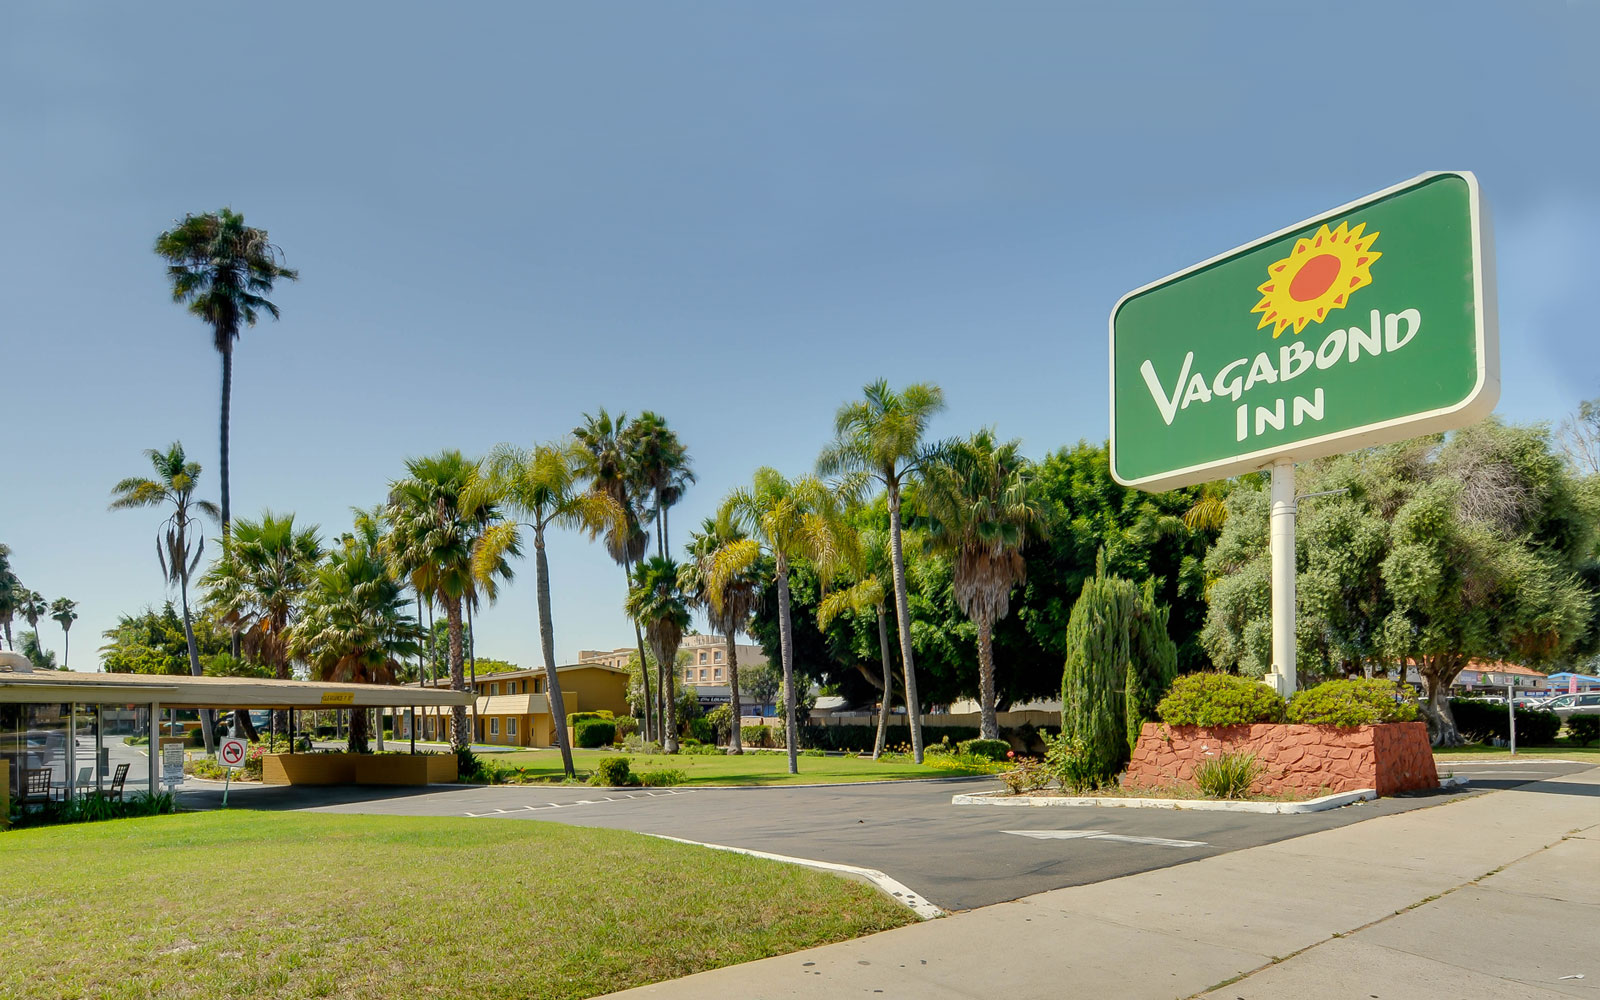 About Vagabond Inn Hotels at California